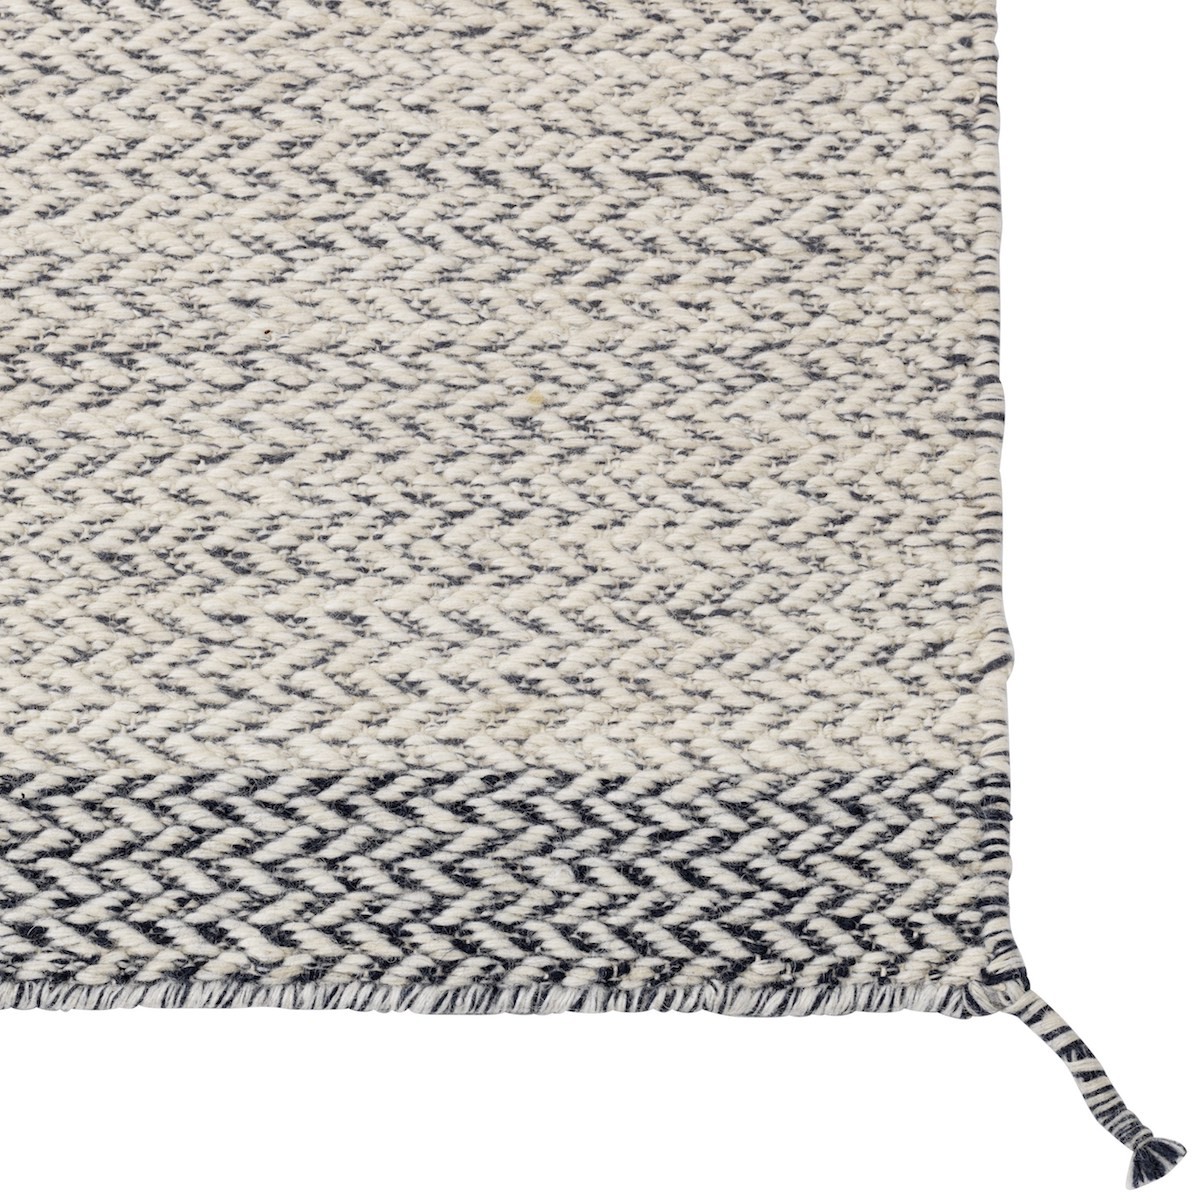 240x170cm - off white - Ply rug